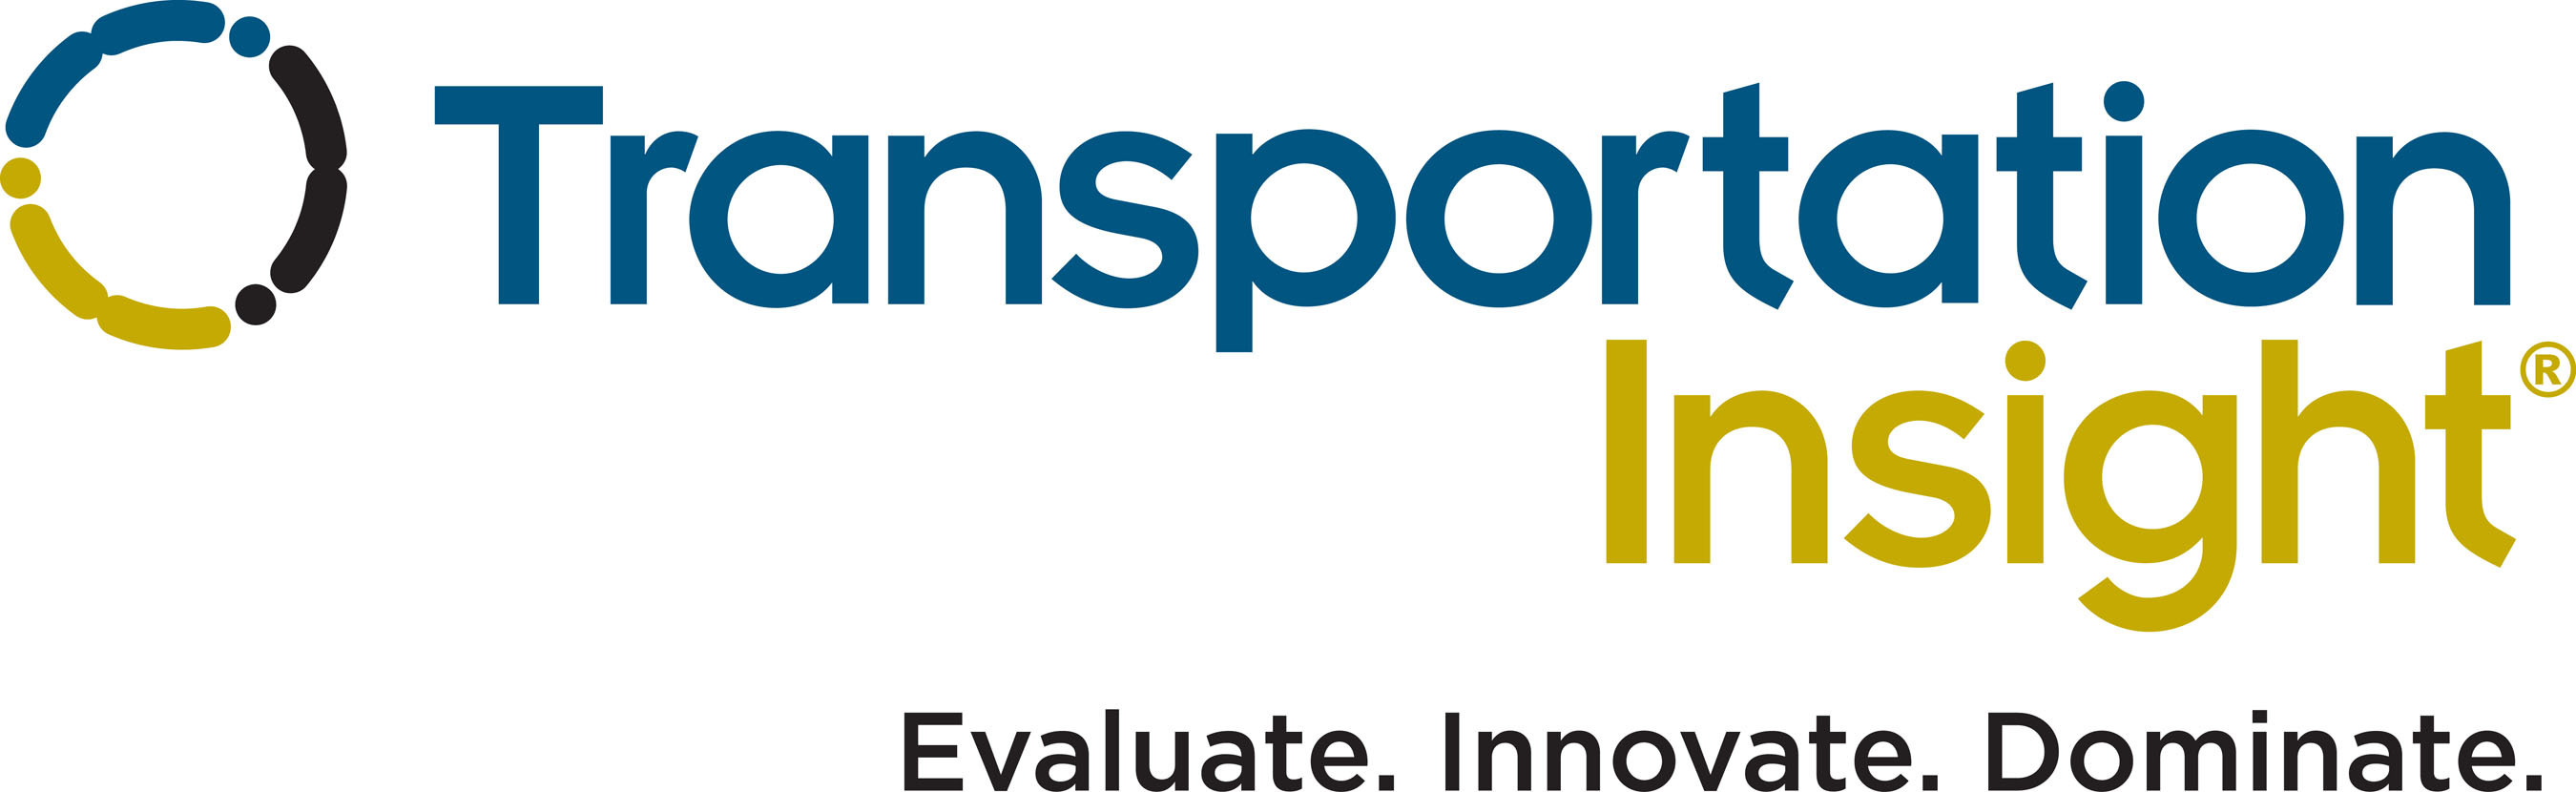 Transportation Insight: Evaluate. Innovate. Dominate. (PRNewsFoto/Transportation Insight) (PRNewsFoto/)